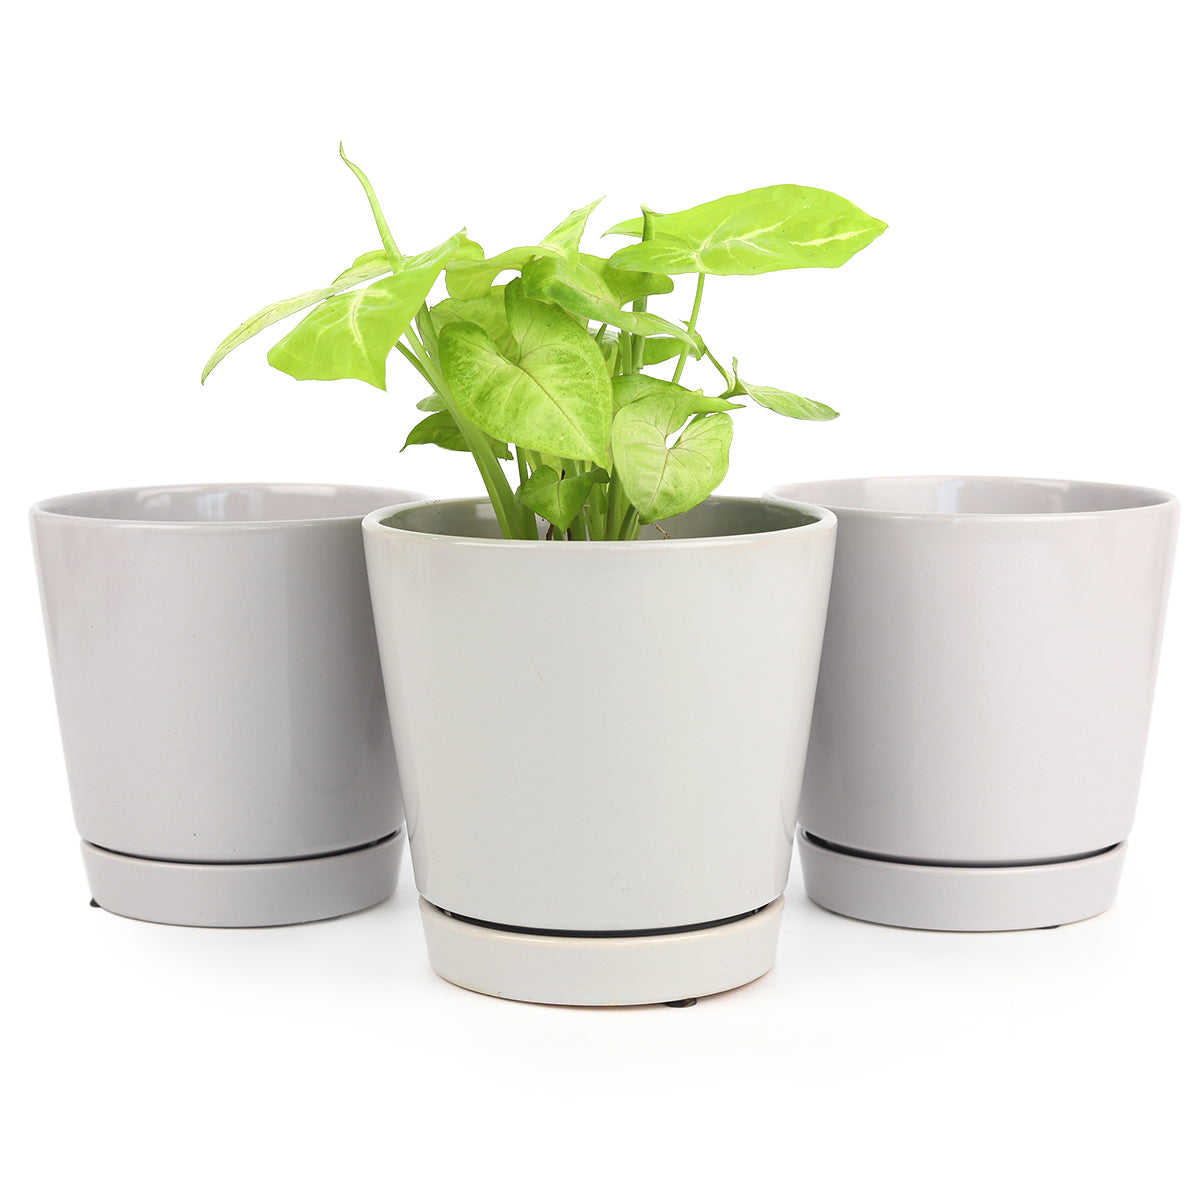 6 inch minimal pot, houseplant pot, houseplant pot for sale, buy houseplant pot online, ceramic plant pot, ceramic planter with saucer, set of 3 planter, pack of 3 plant pot for houseplants